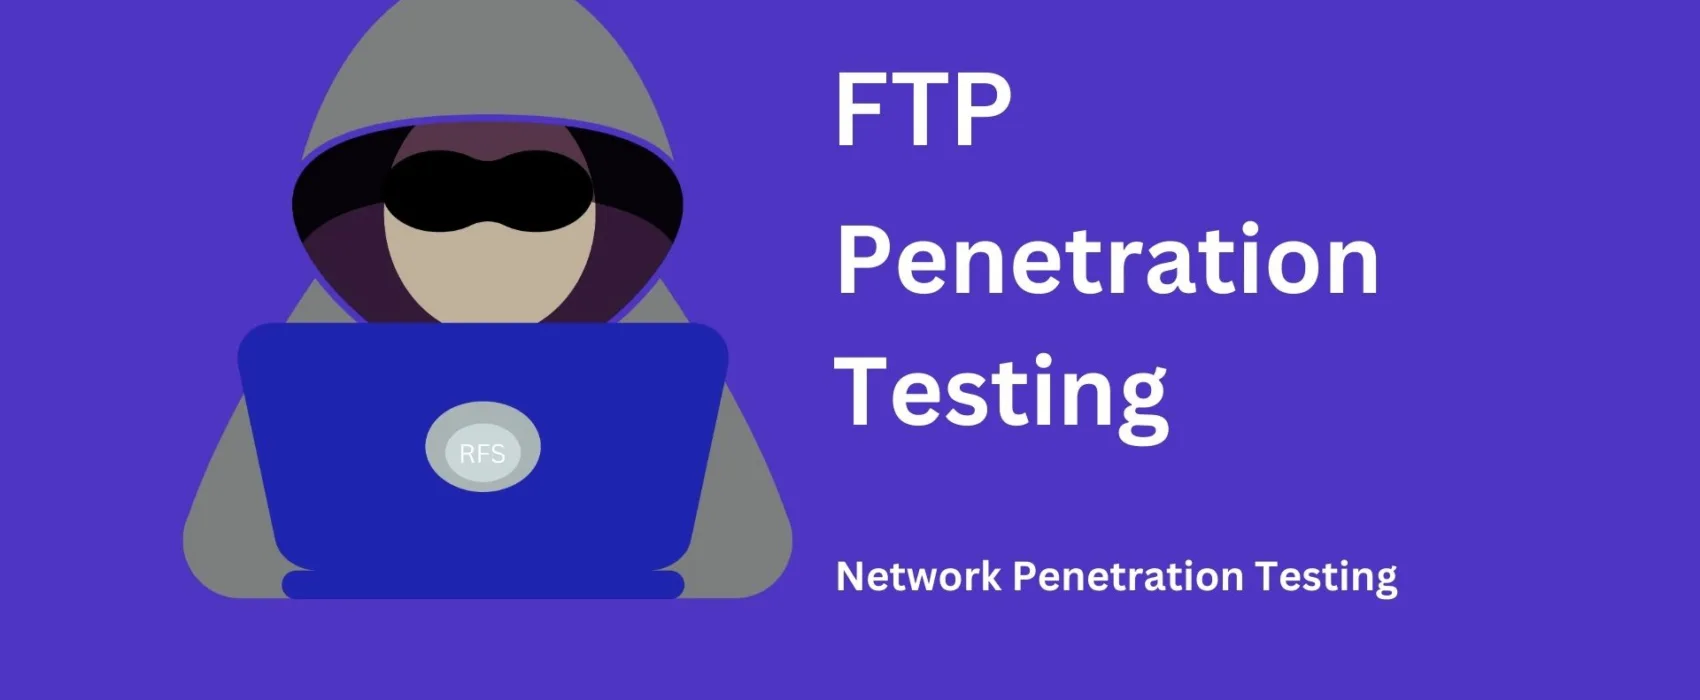 FTP-Penetration-Testing